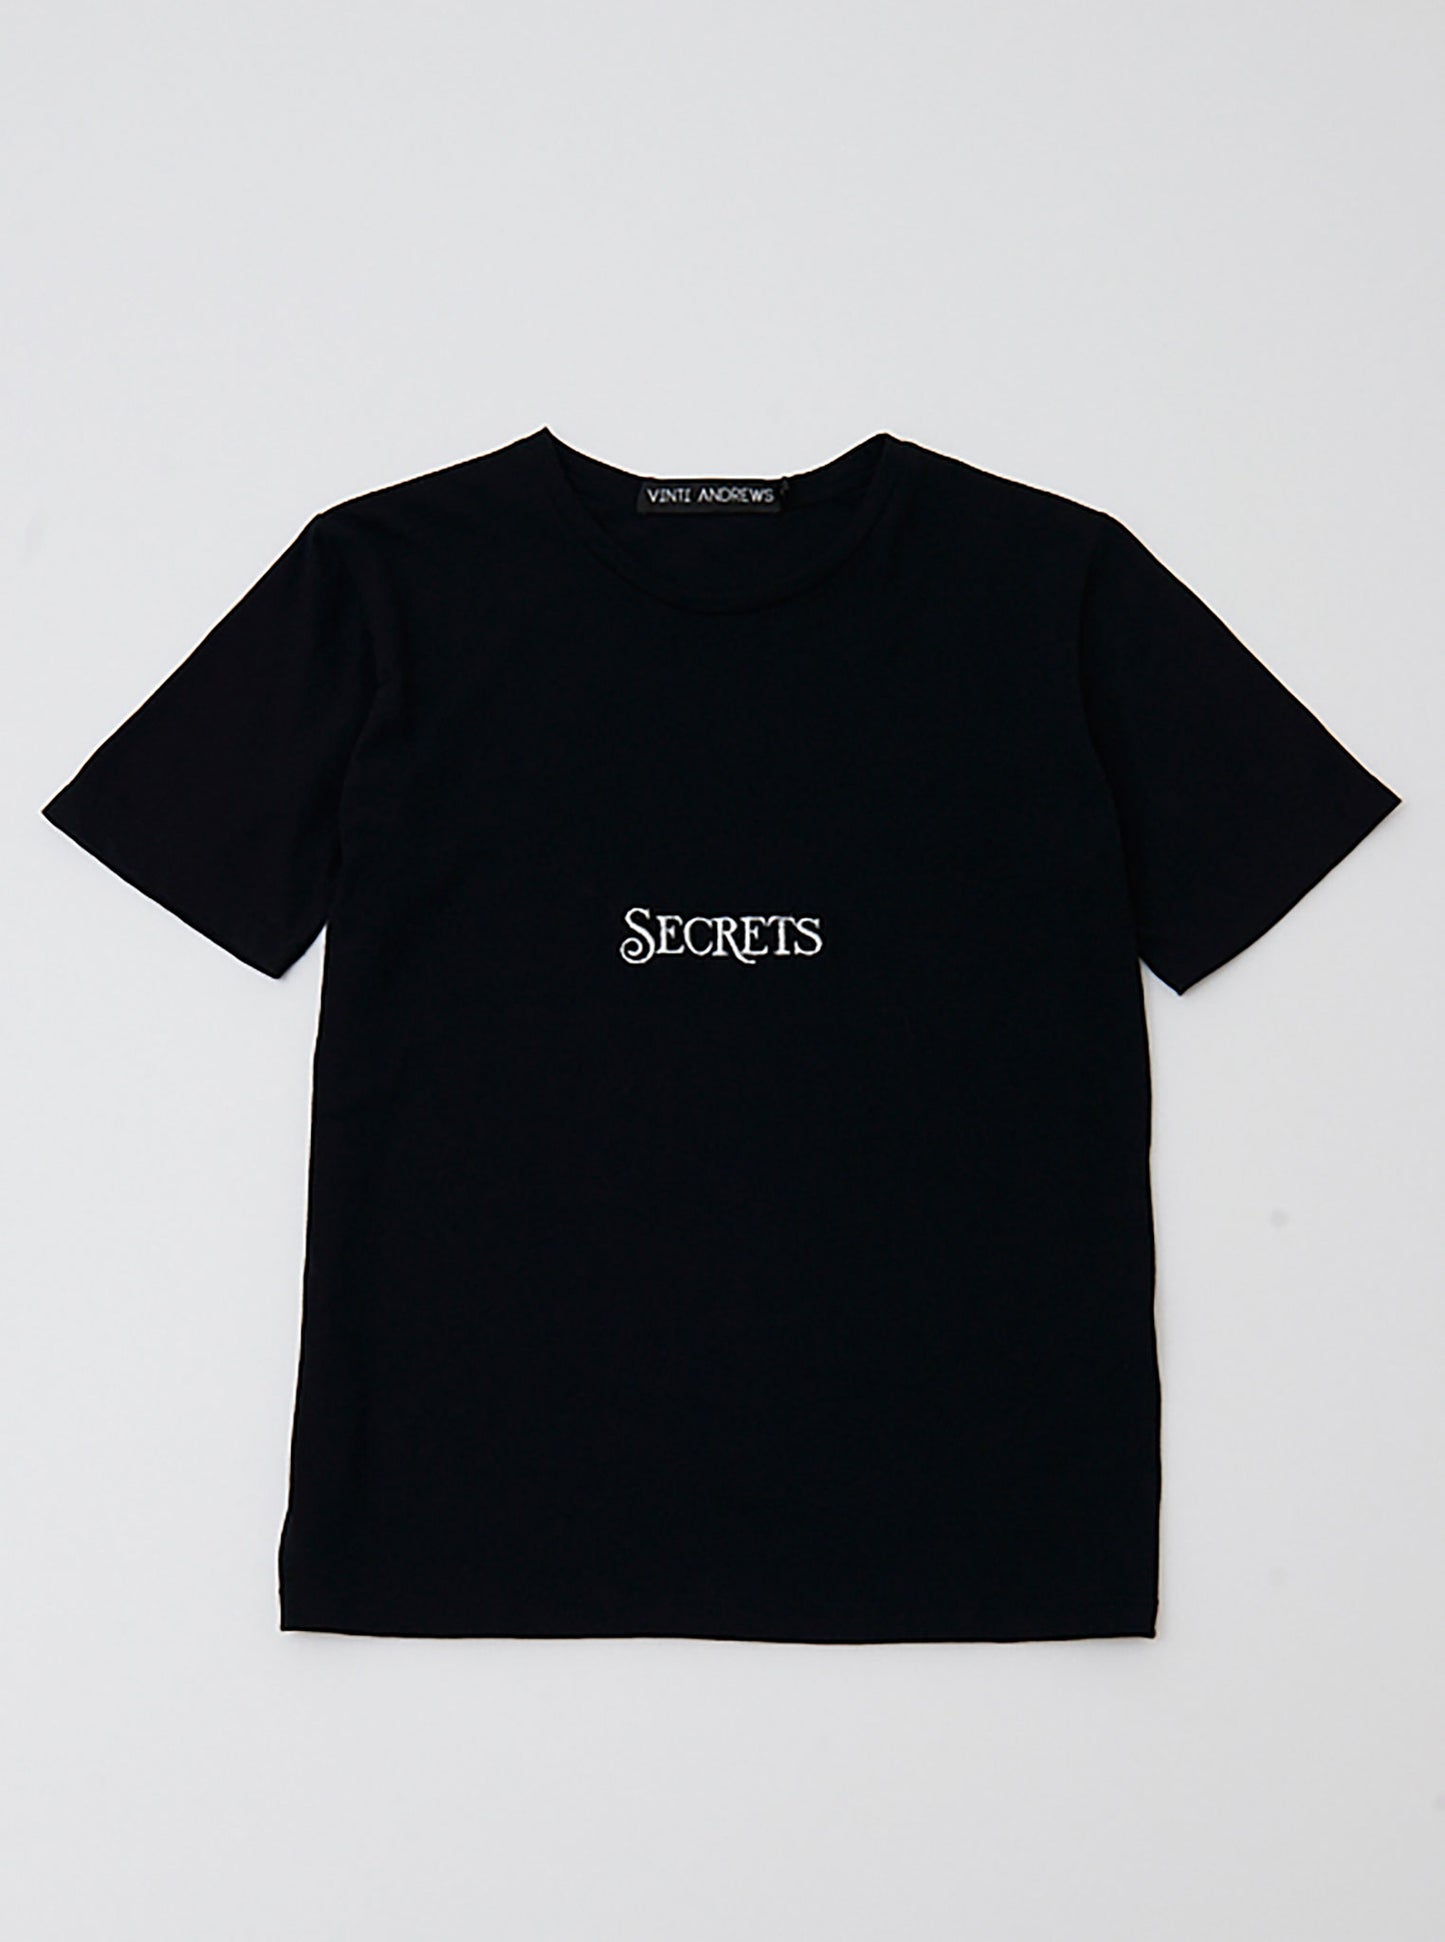 Vinti Andrews Secret Embroidery Girl Black T-Shirt